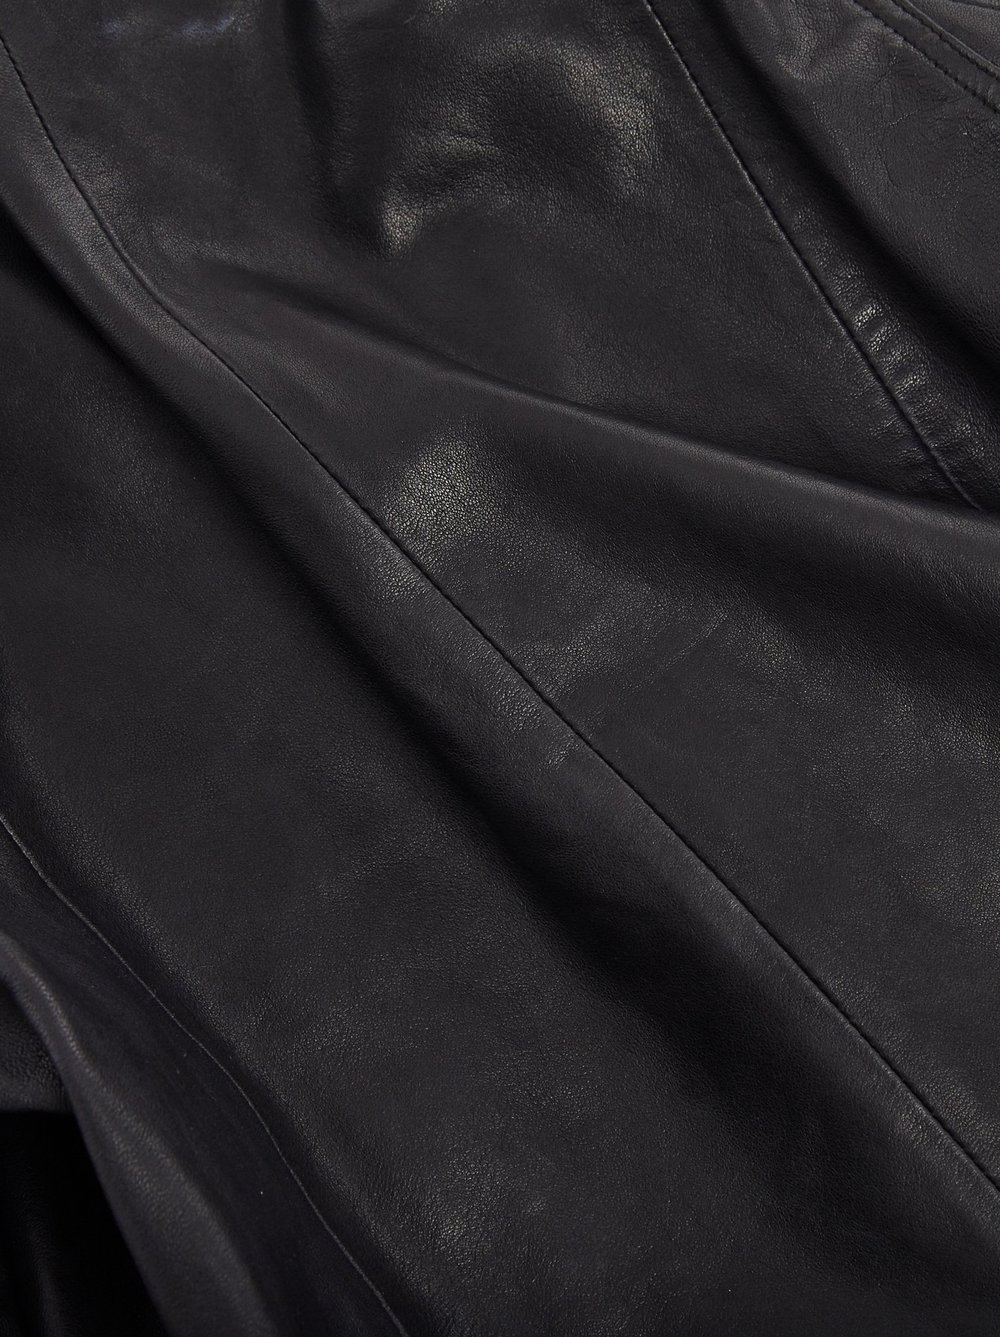 Black Maha Leather Jacket - Kingfisher Road - Online Boutique